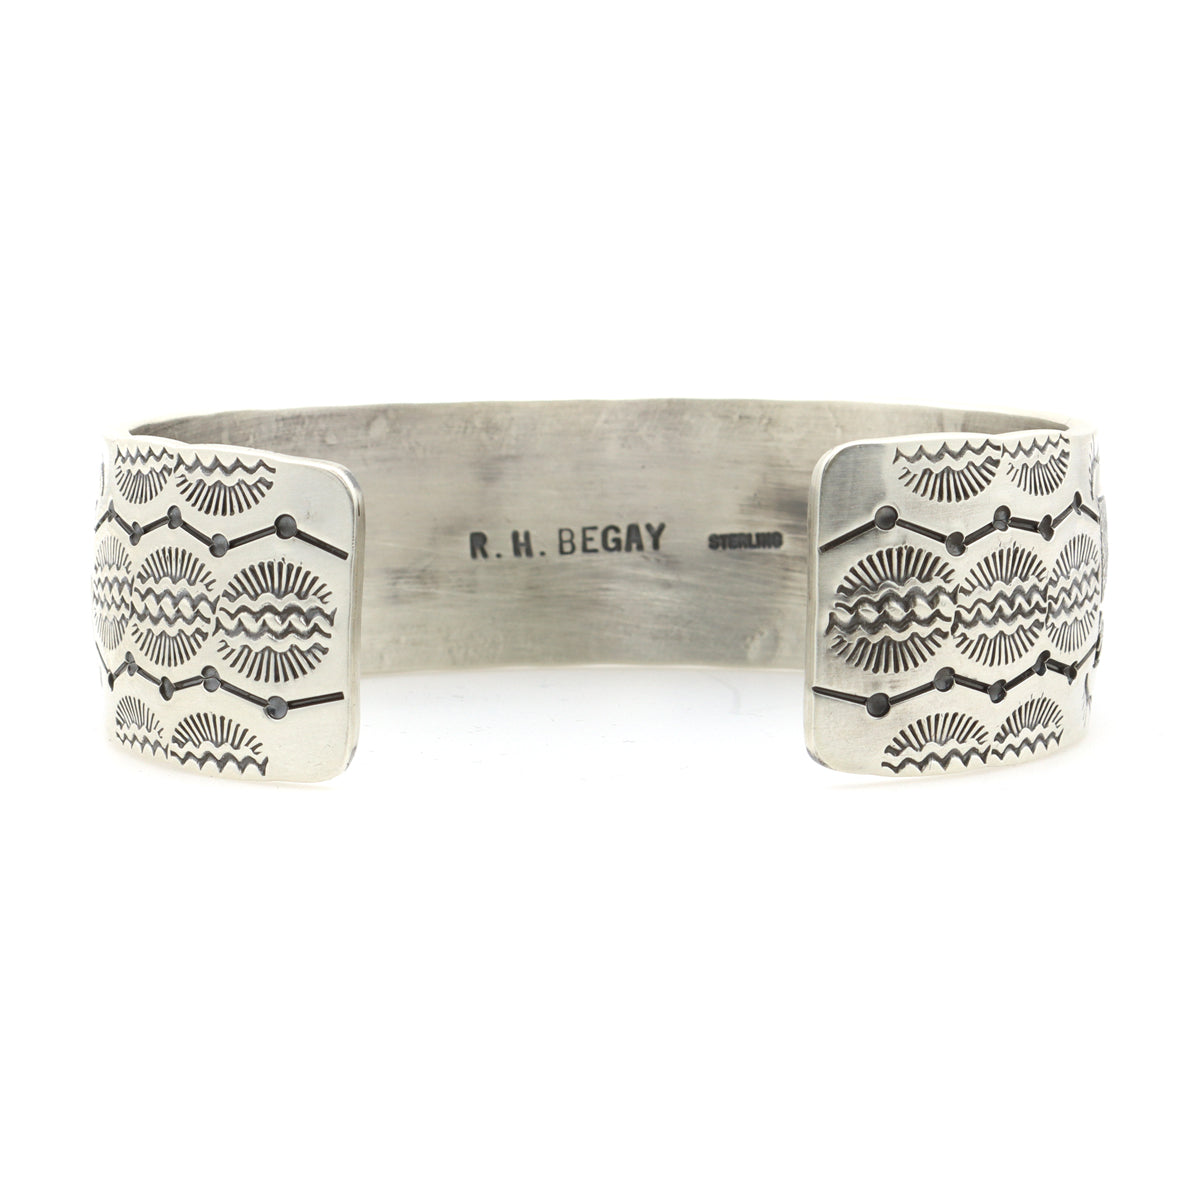 Roland Begay - Navajo Contemporary Sterling Silver Storyteller Bracelet with Stamped Design, size 6.75 (J13221) 2
